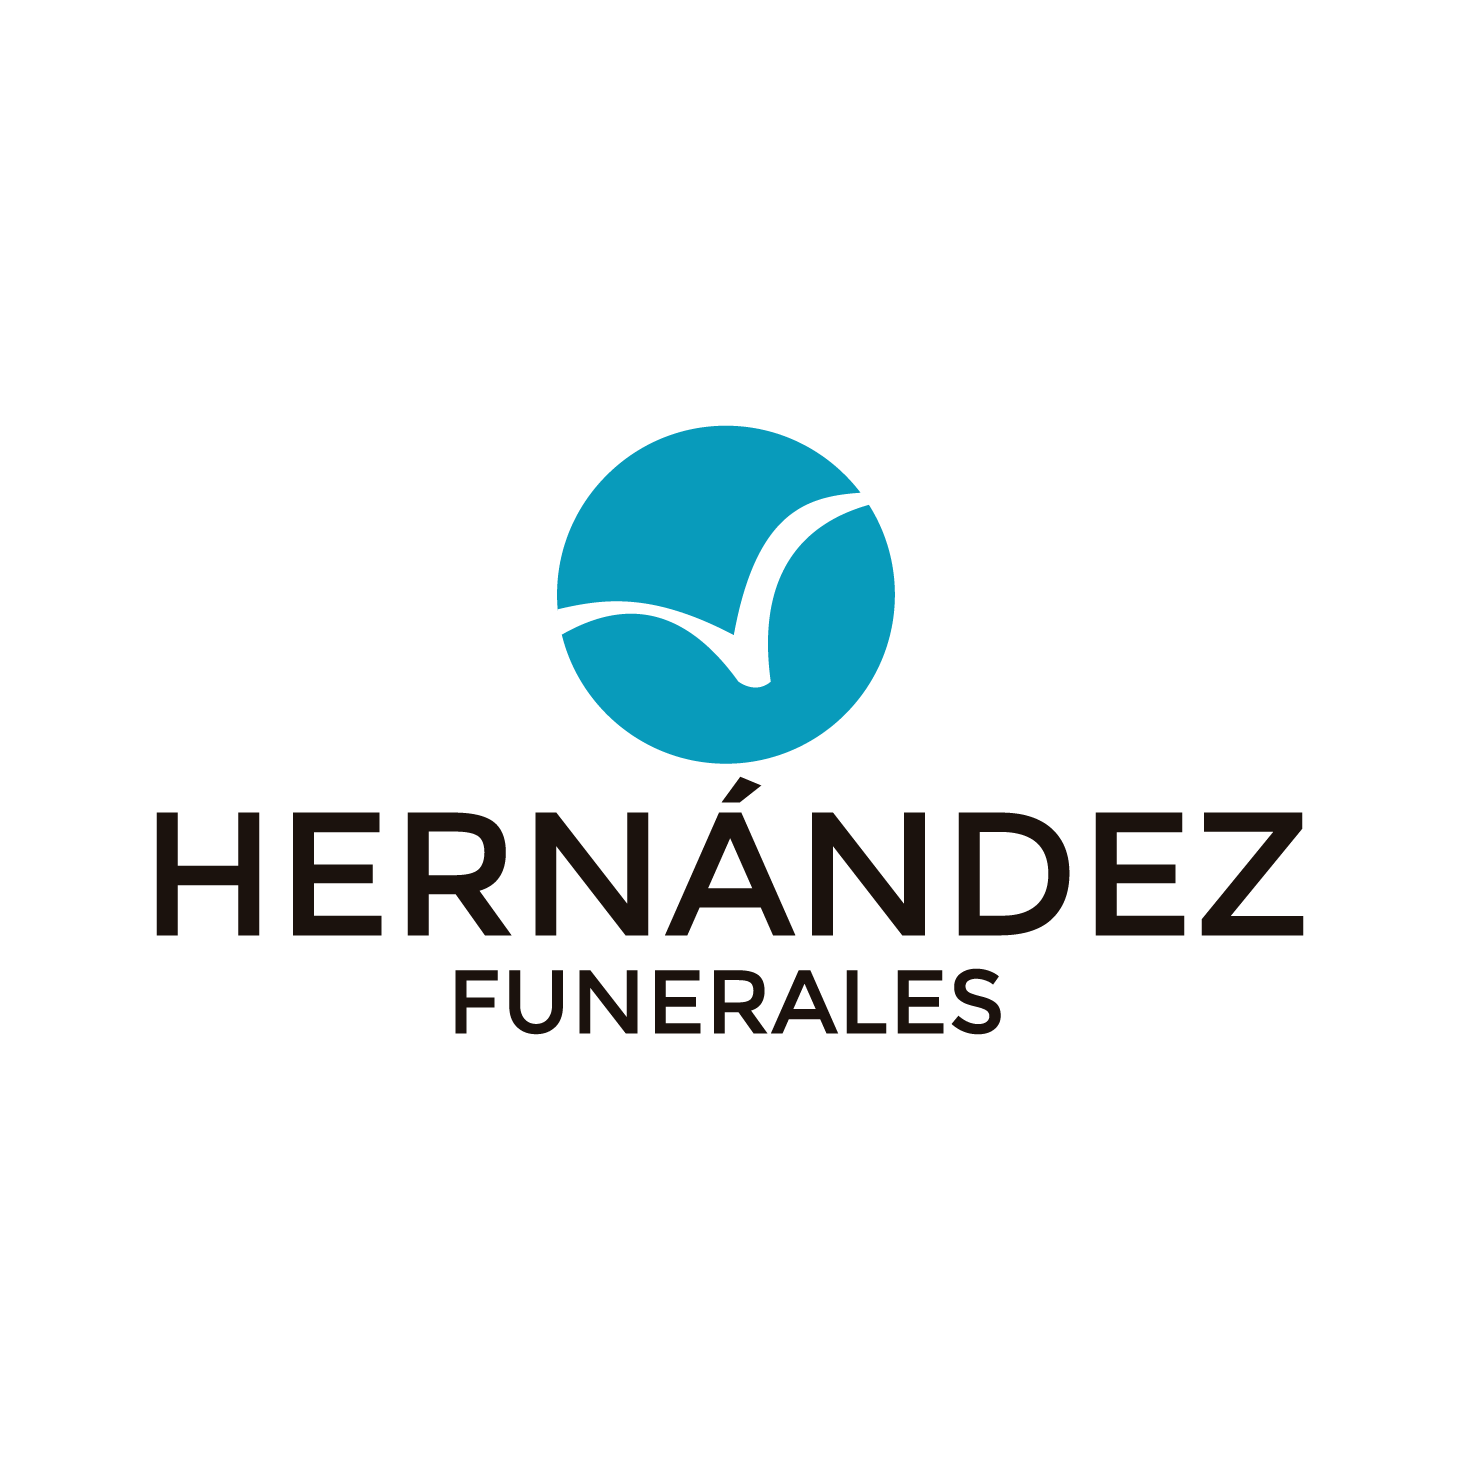 Funerales Hernandez Logo